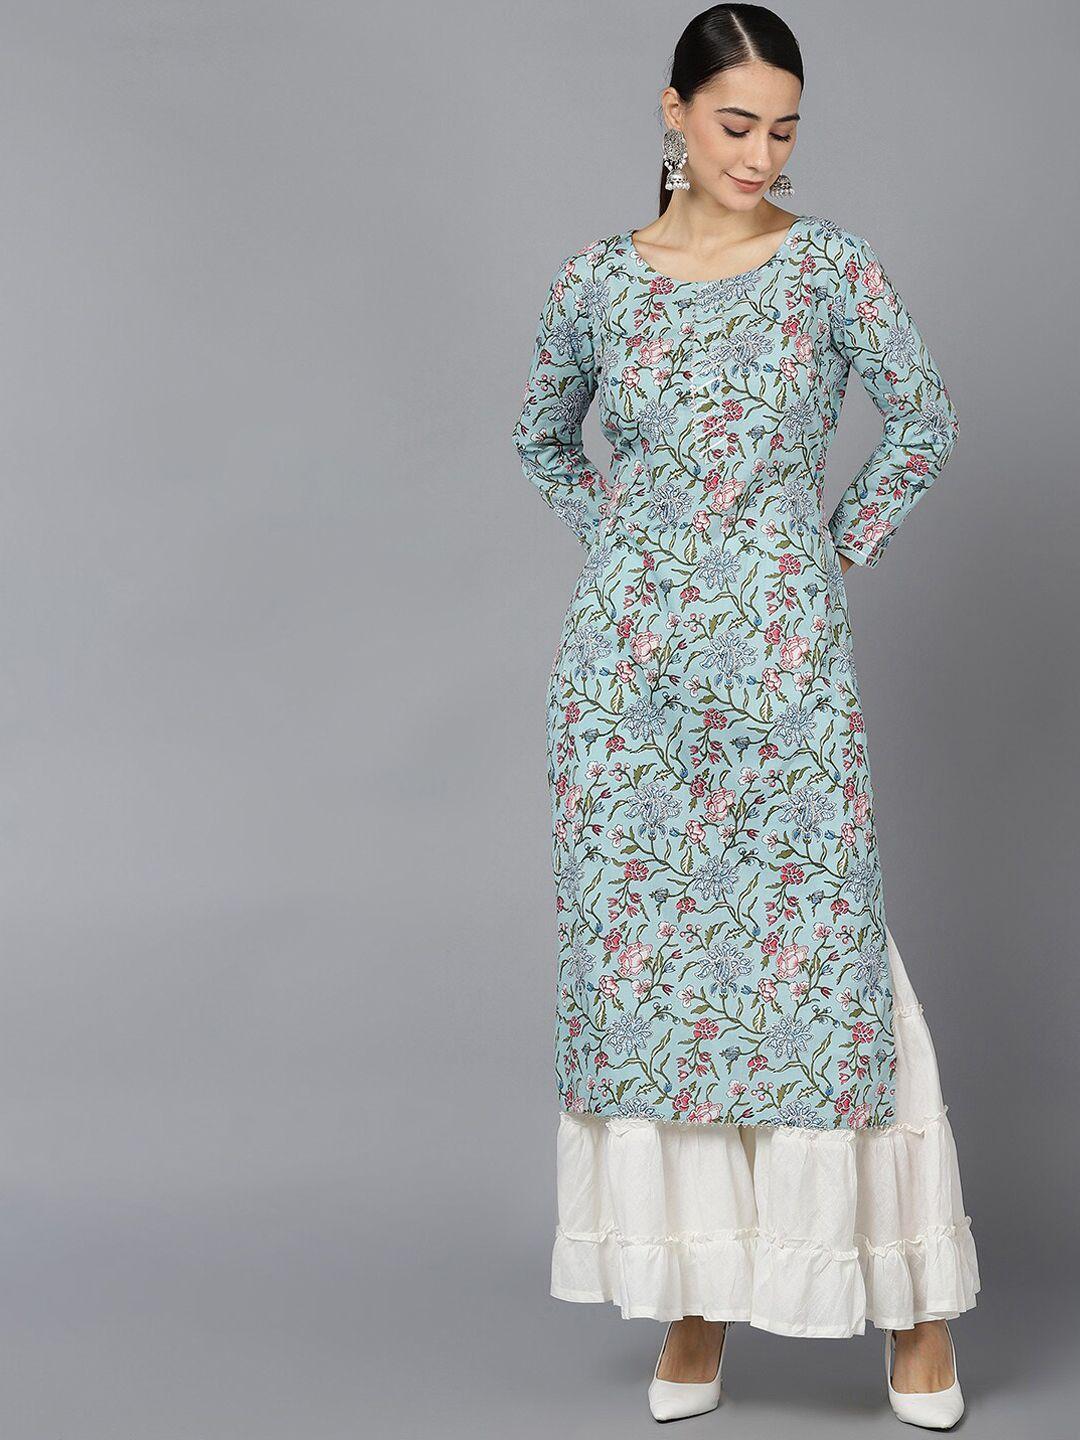 ahika women blue floral printed cotton kurta